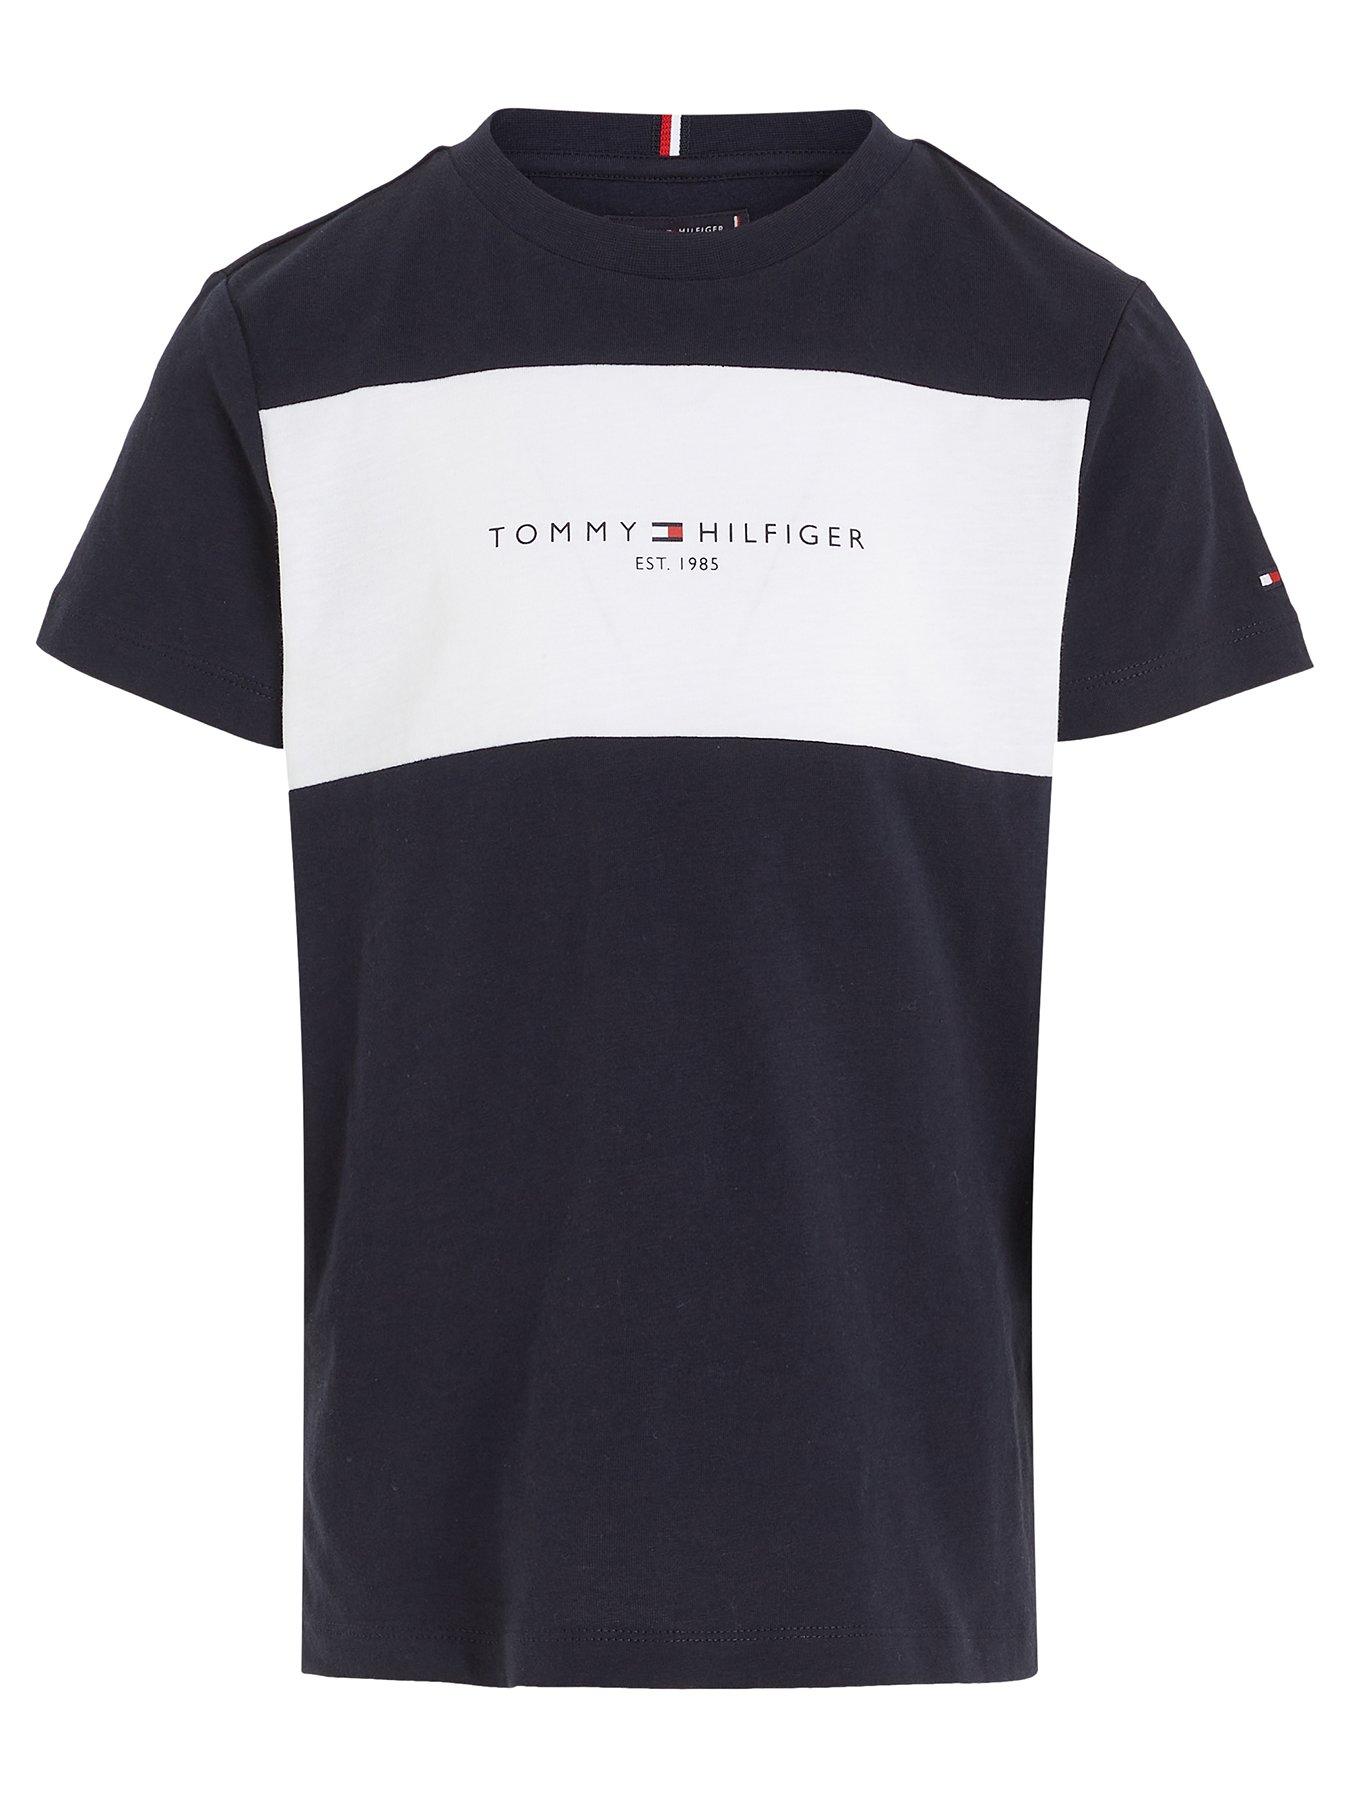 Tommy Hilfiger - TH Monogram Long Sleeve T-Shirt - Boys - Grey - 14yrs